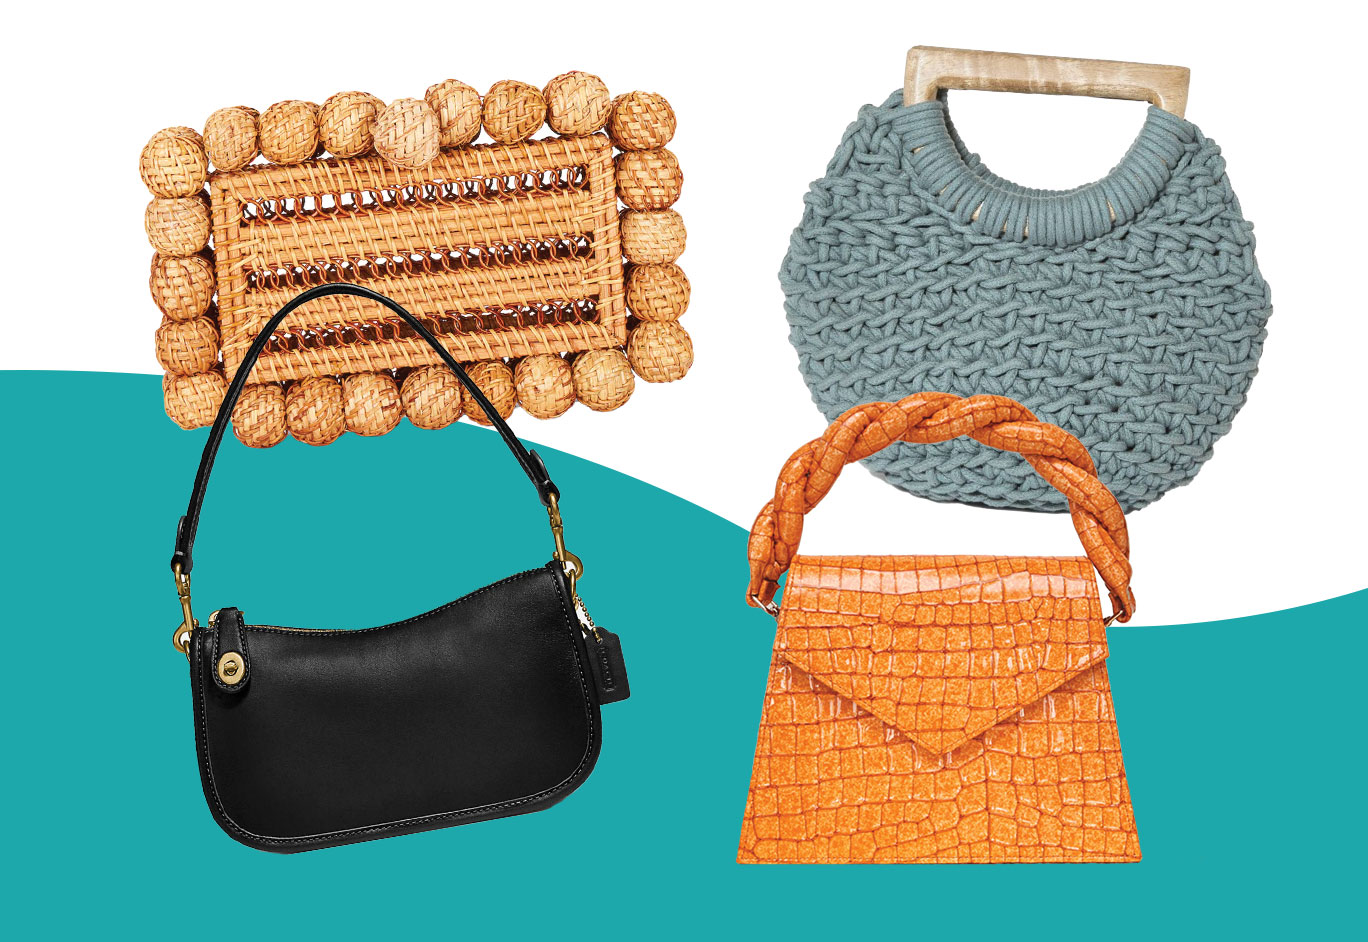 Women's Elaborate Handbags Collection